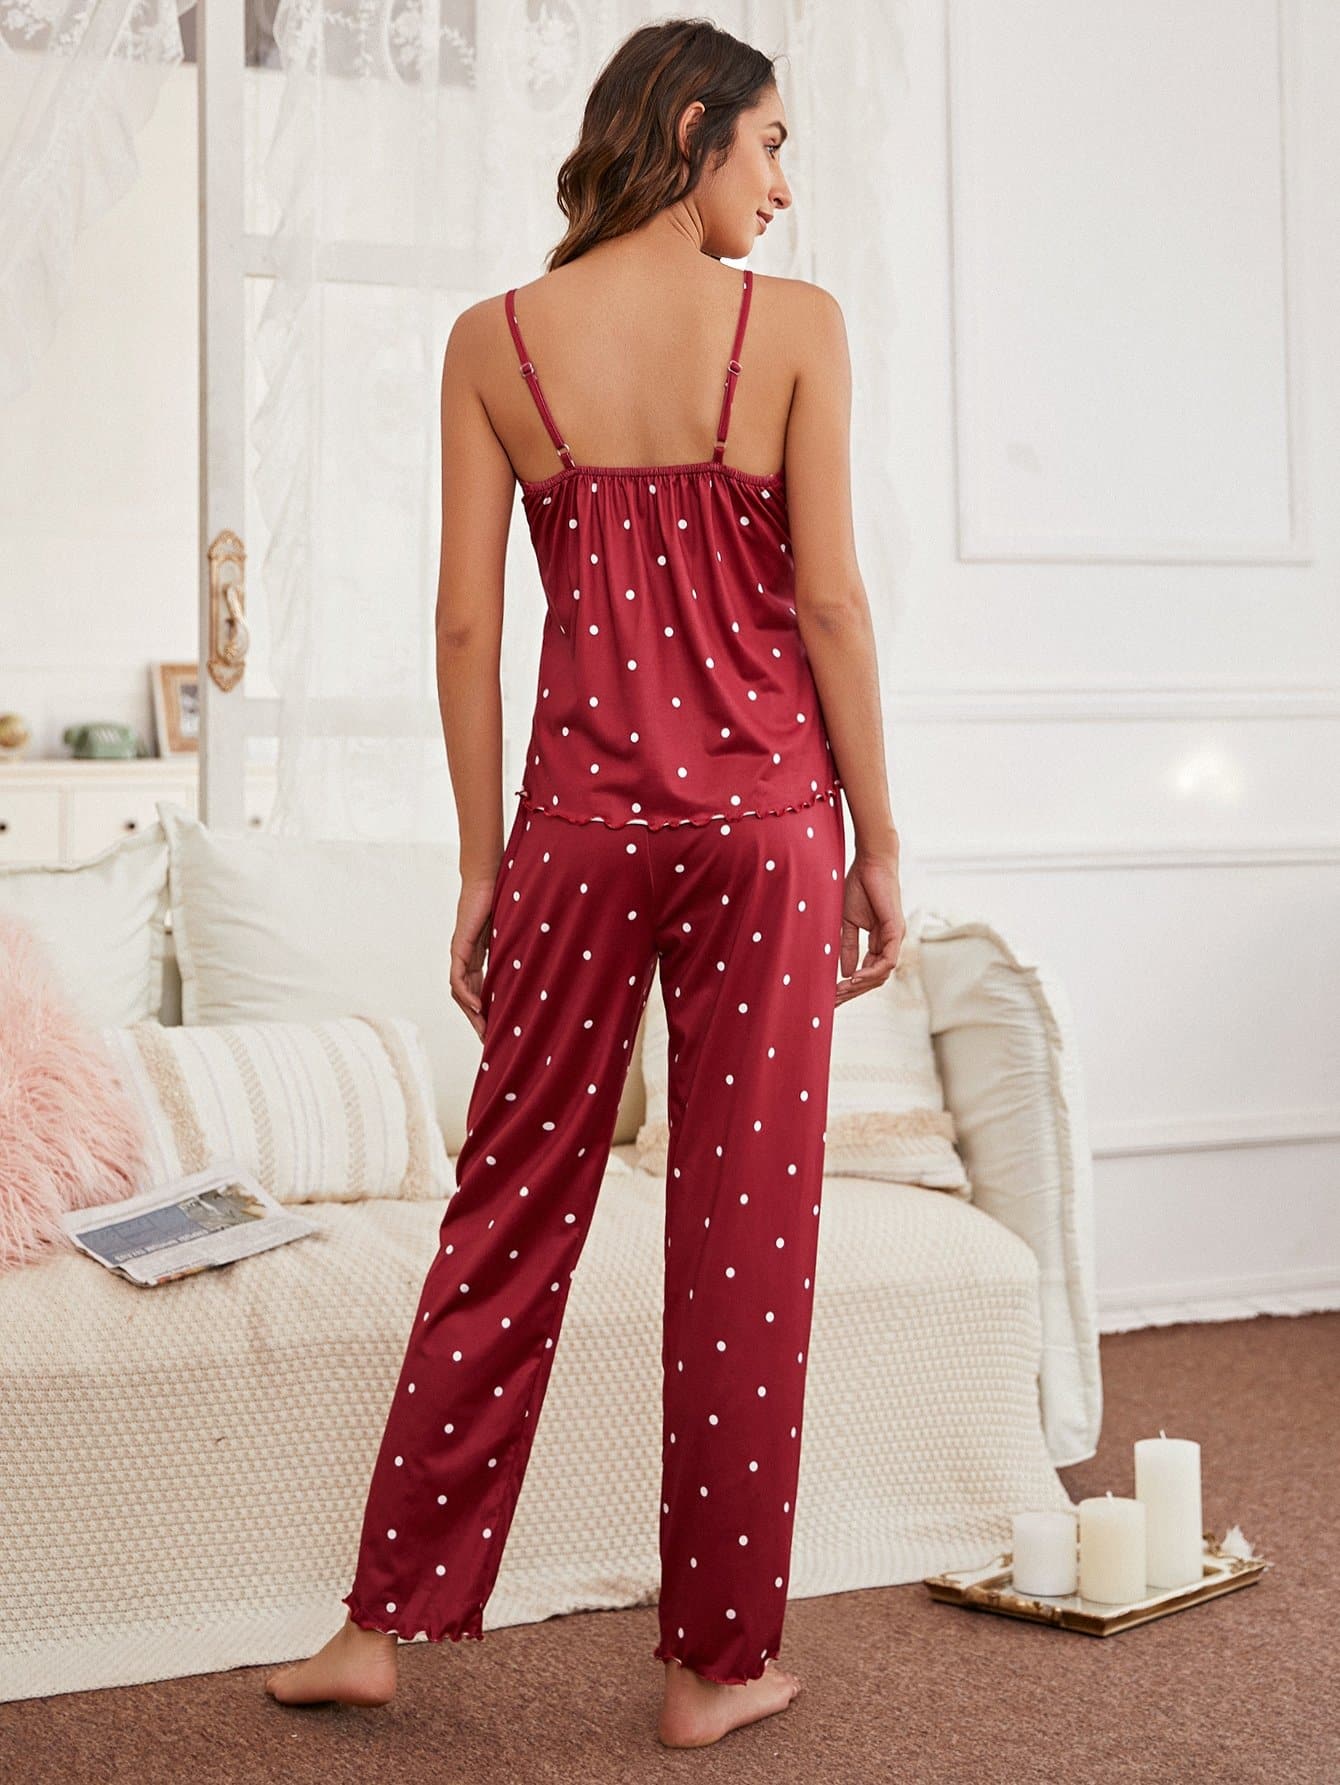 Burgundy Polka Dot Spaghetti Strap Sleeveless Lace Trim Pyjama Sleepwear Set